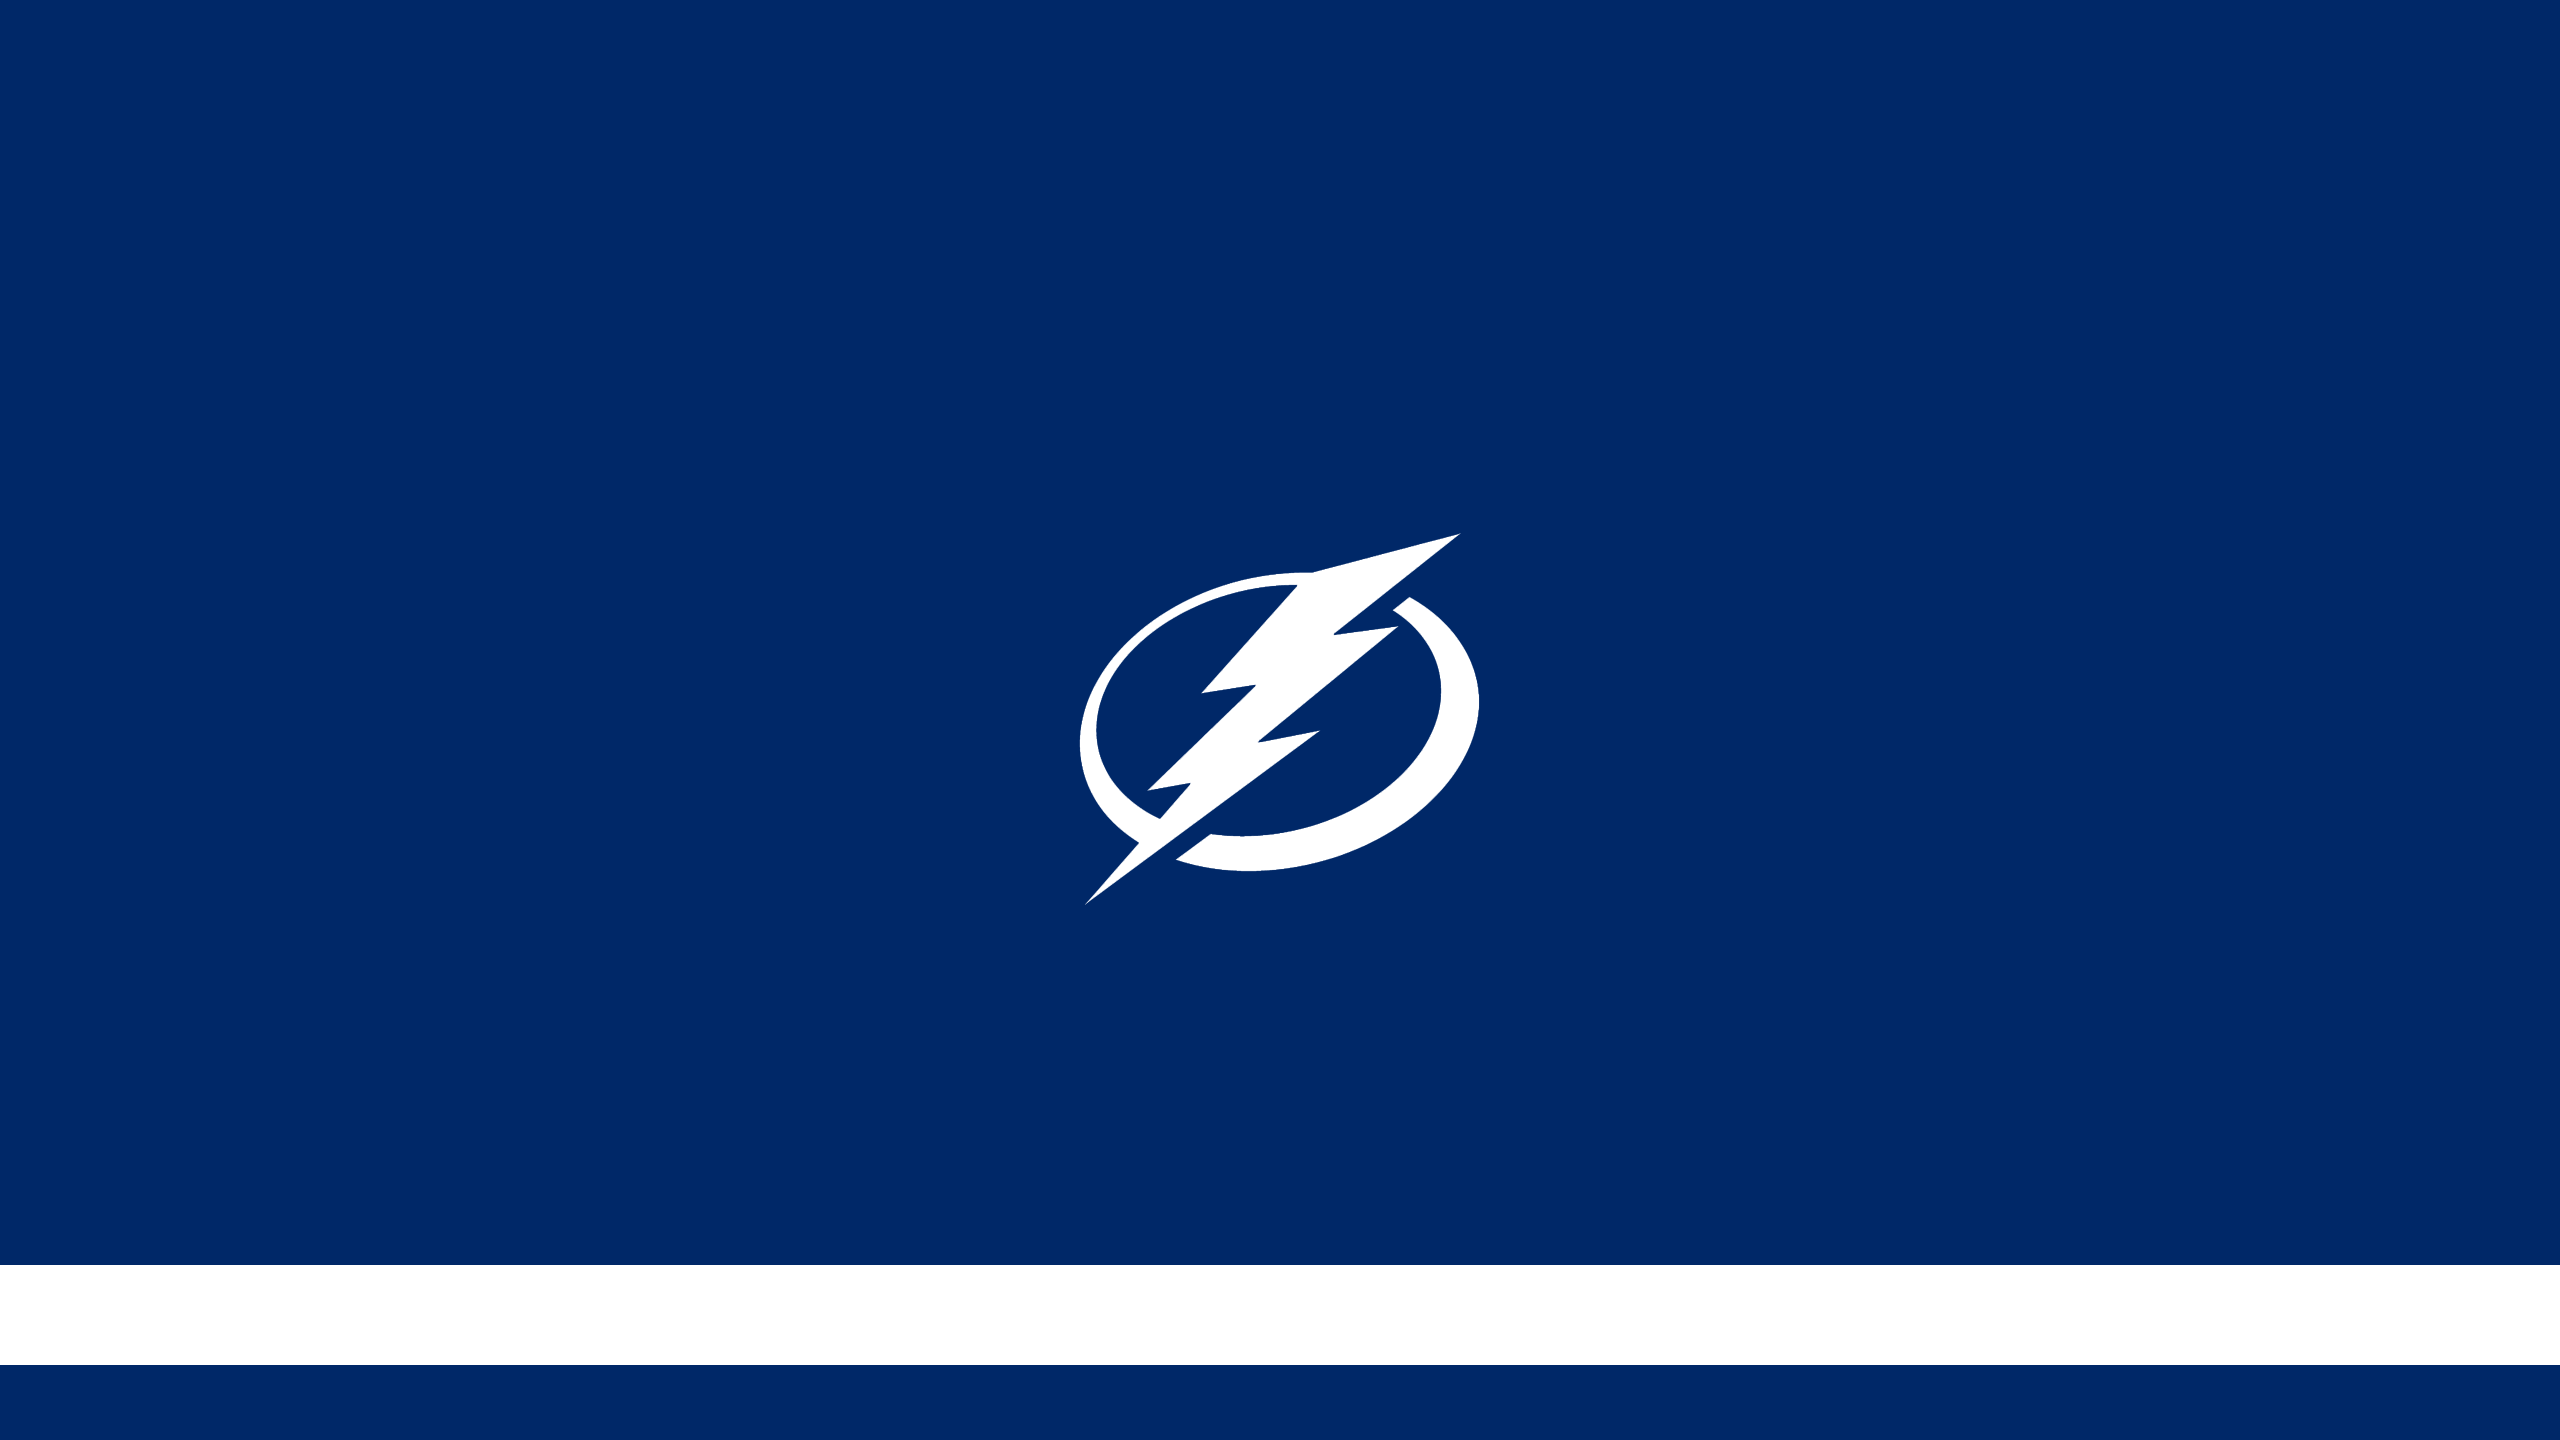 Tampa Bay Lightning - NHL - Square Bettor